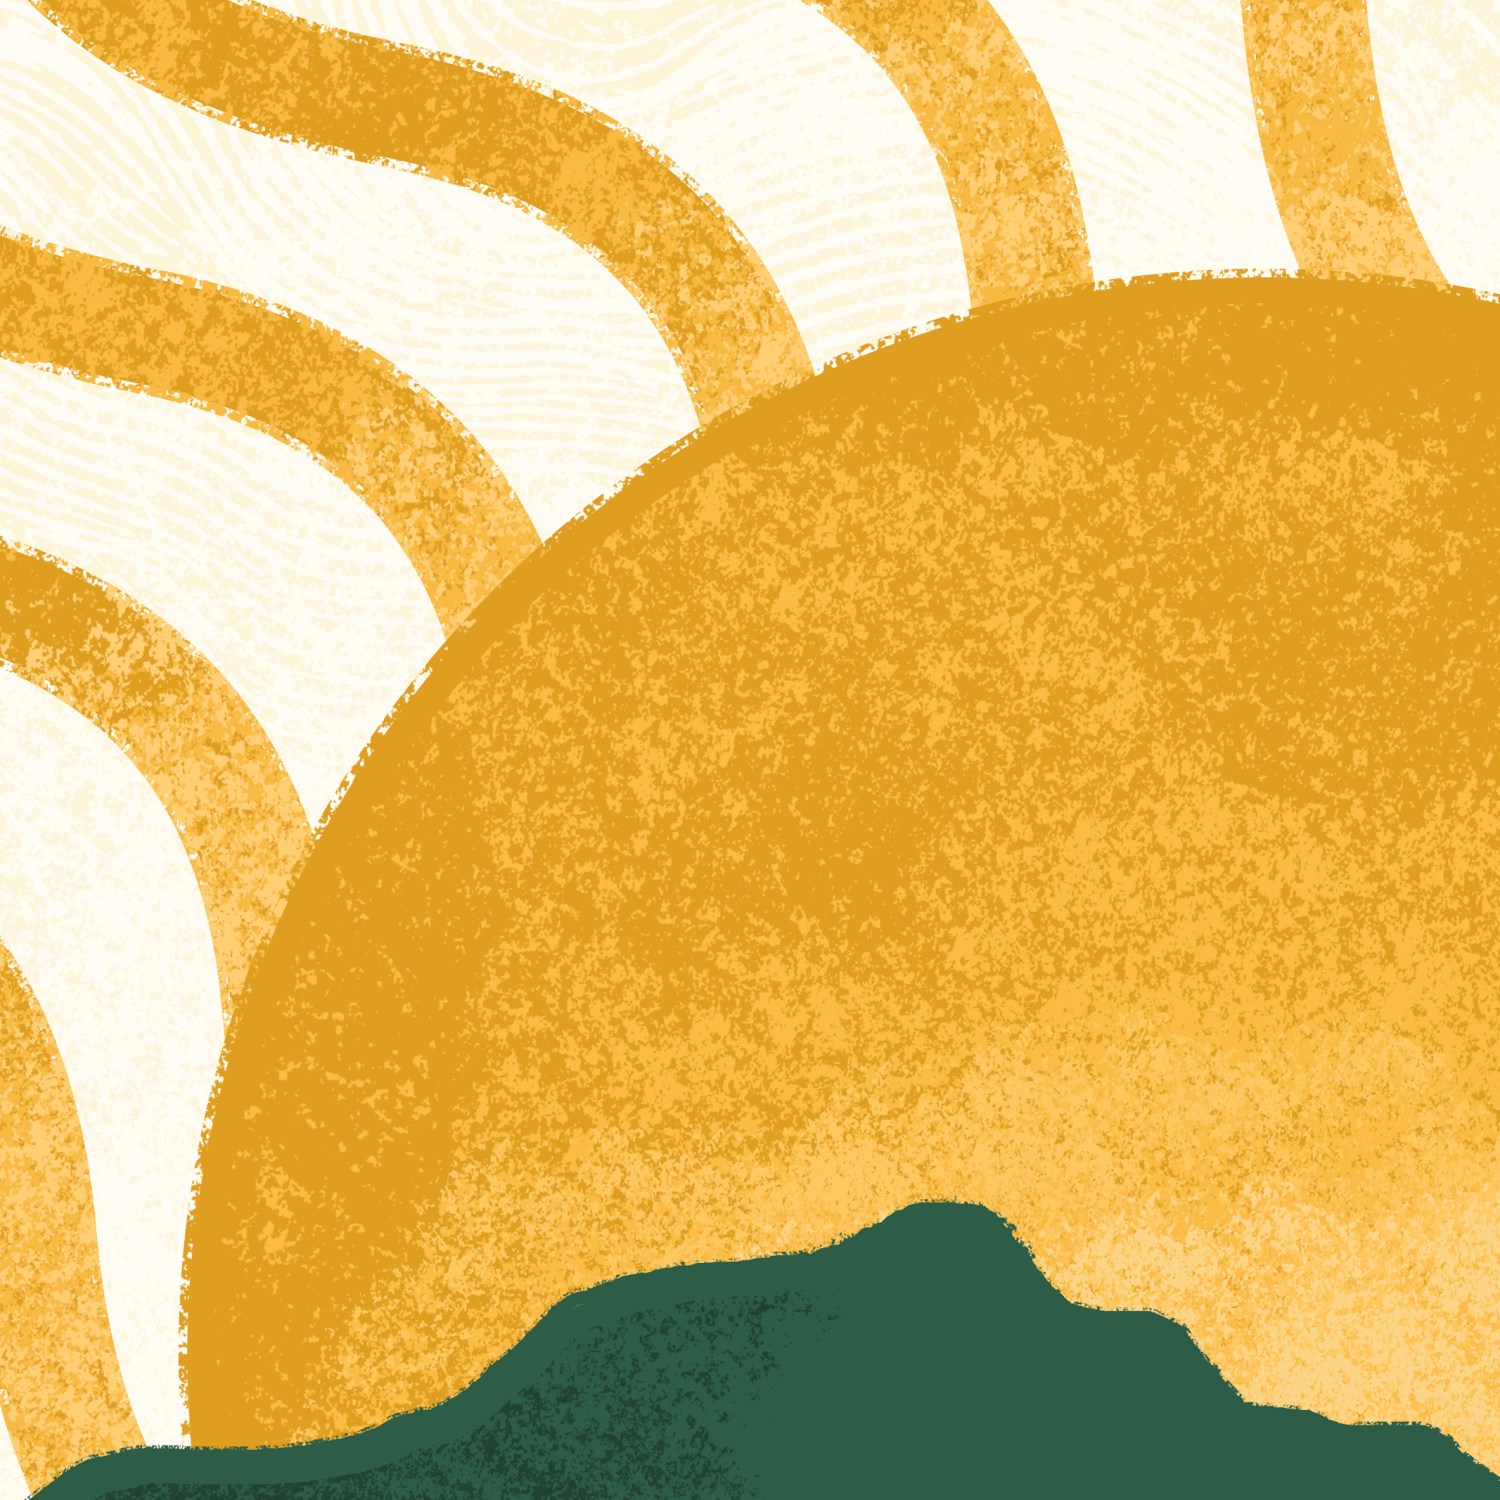 Illustration of the sun over green hills